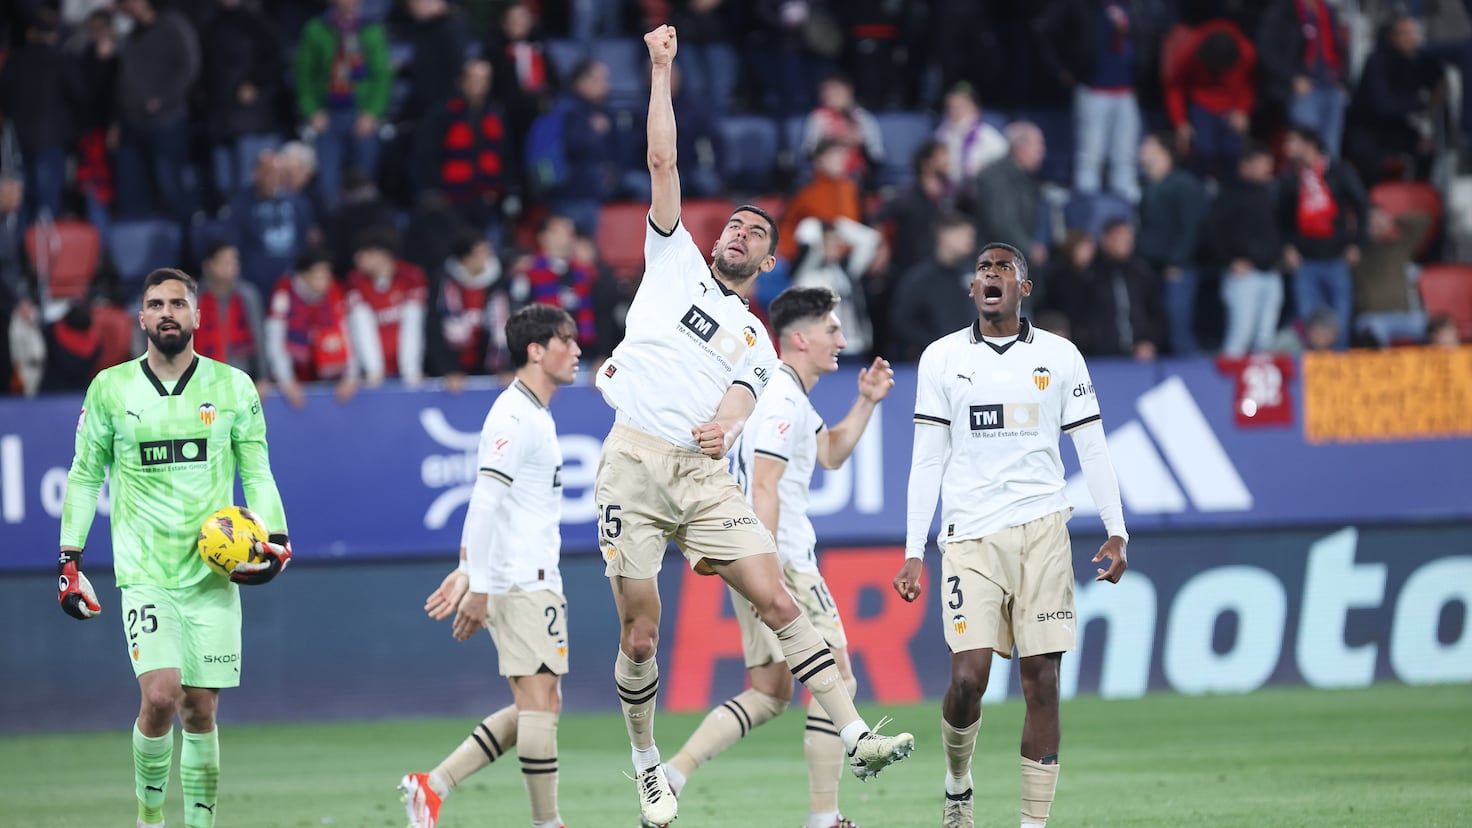 Valencia's Rise: Best Season Post-Marcelino for European Dreams!